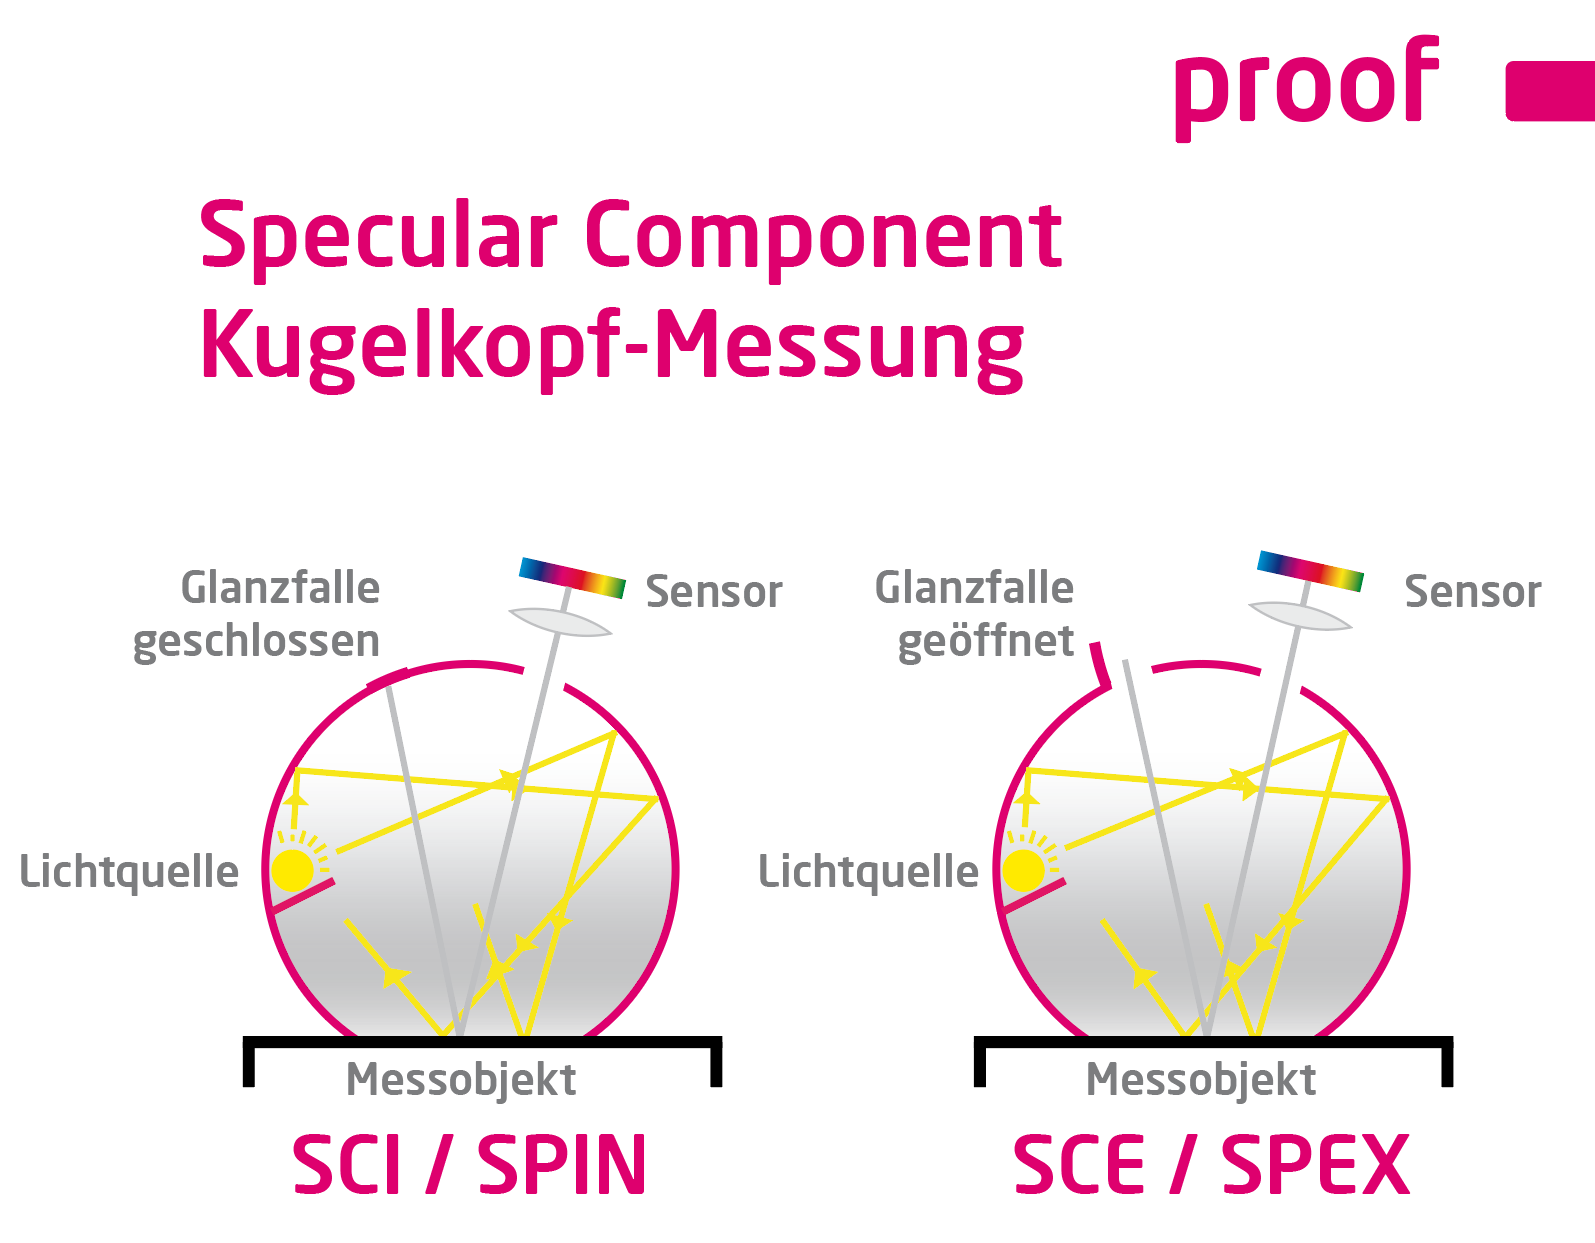 Speculaire component kogelkopmeting SCI / SPIN en SCE / SPEX uitgelegd